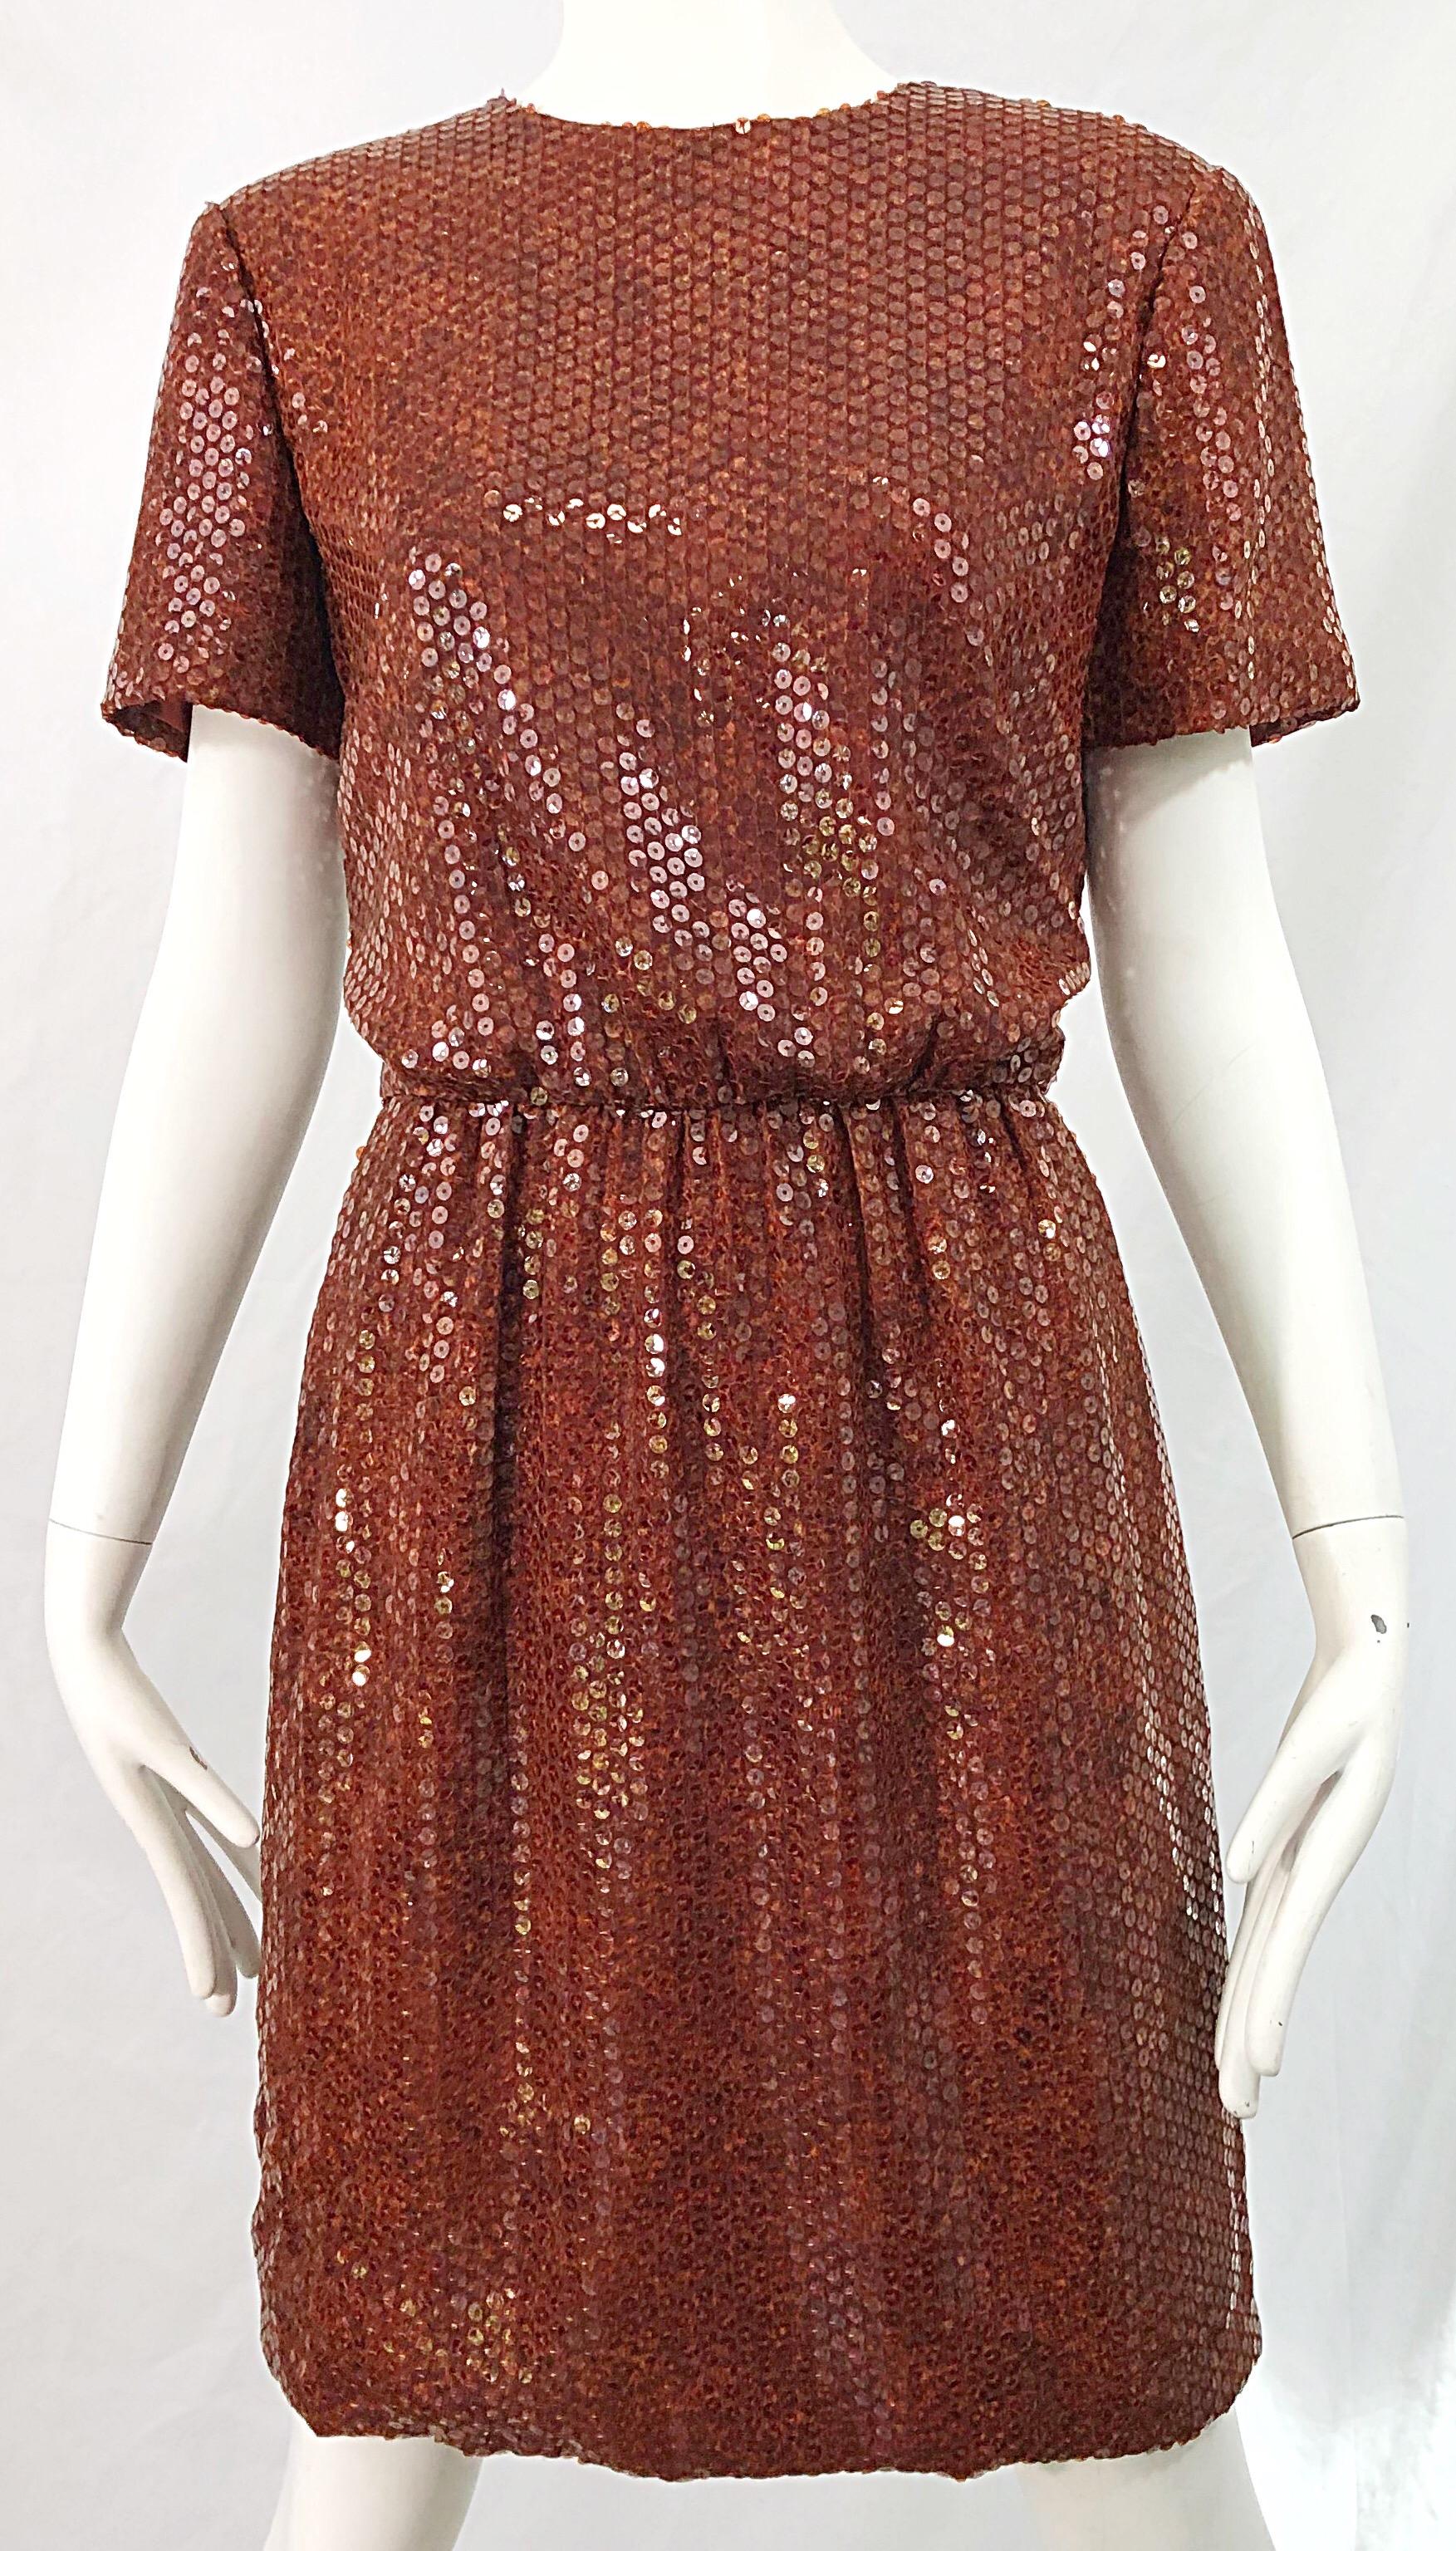 Bill Blass 1980s Tortoise Shell Print Brown Sequin Size 6 Vintage 80s Dress For Sale 2